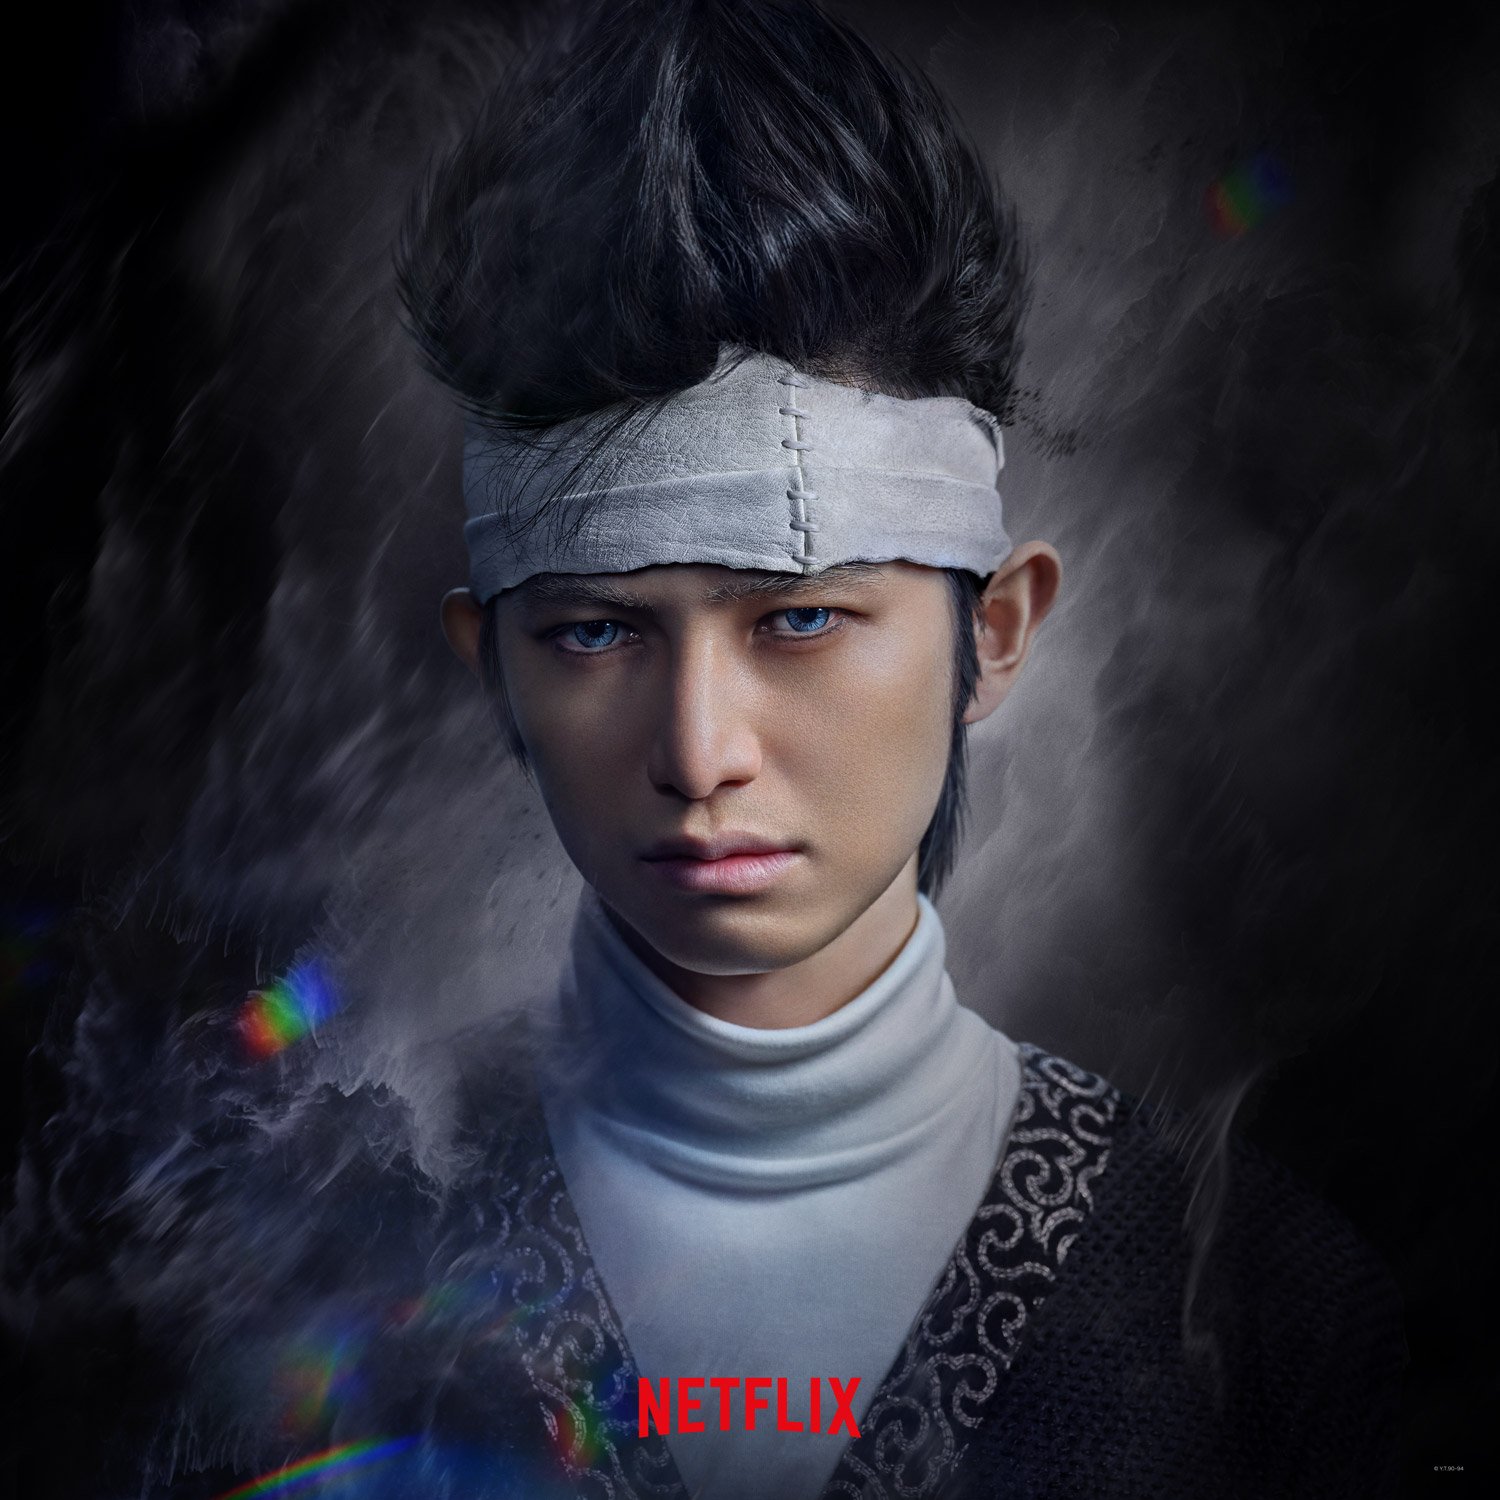 Live-action de Yu Yu Hakusho finalmente ganha data na Netflix - Canaltech